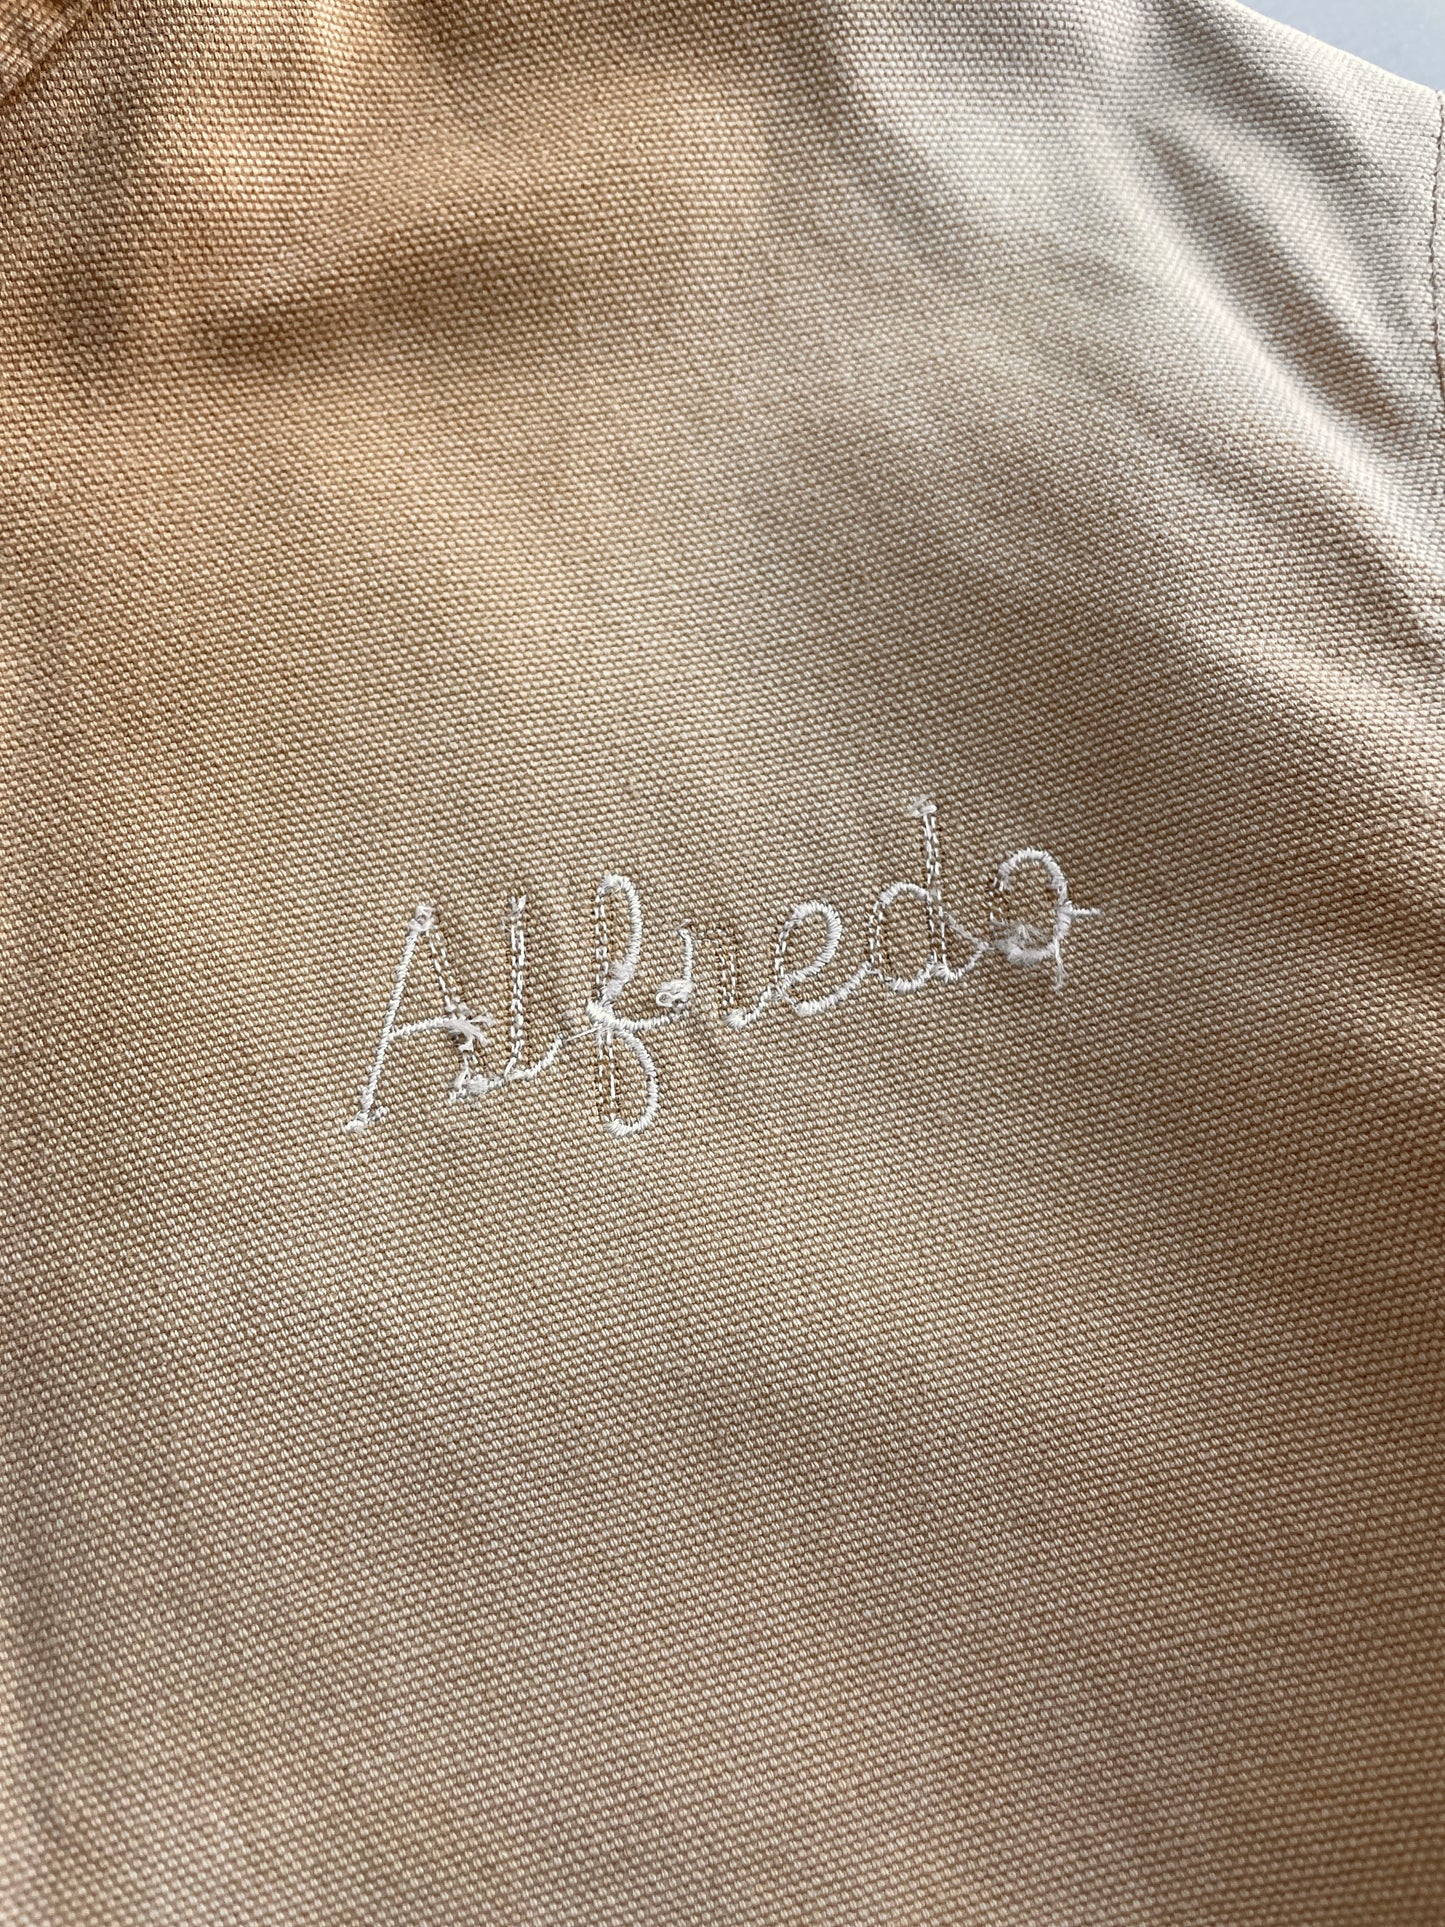 Alfredo's Carhartt Jacket [M]